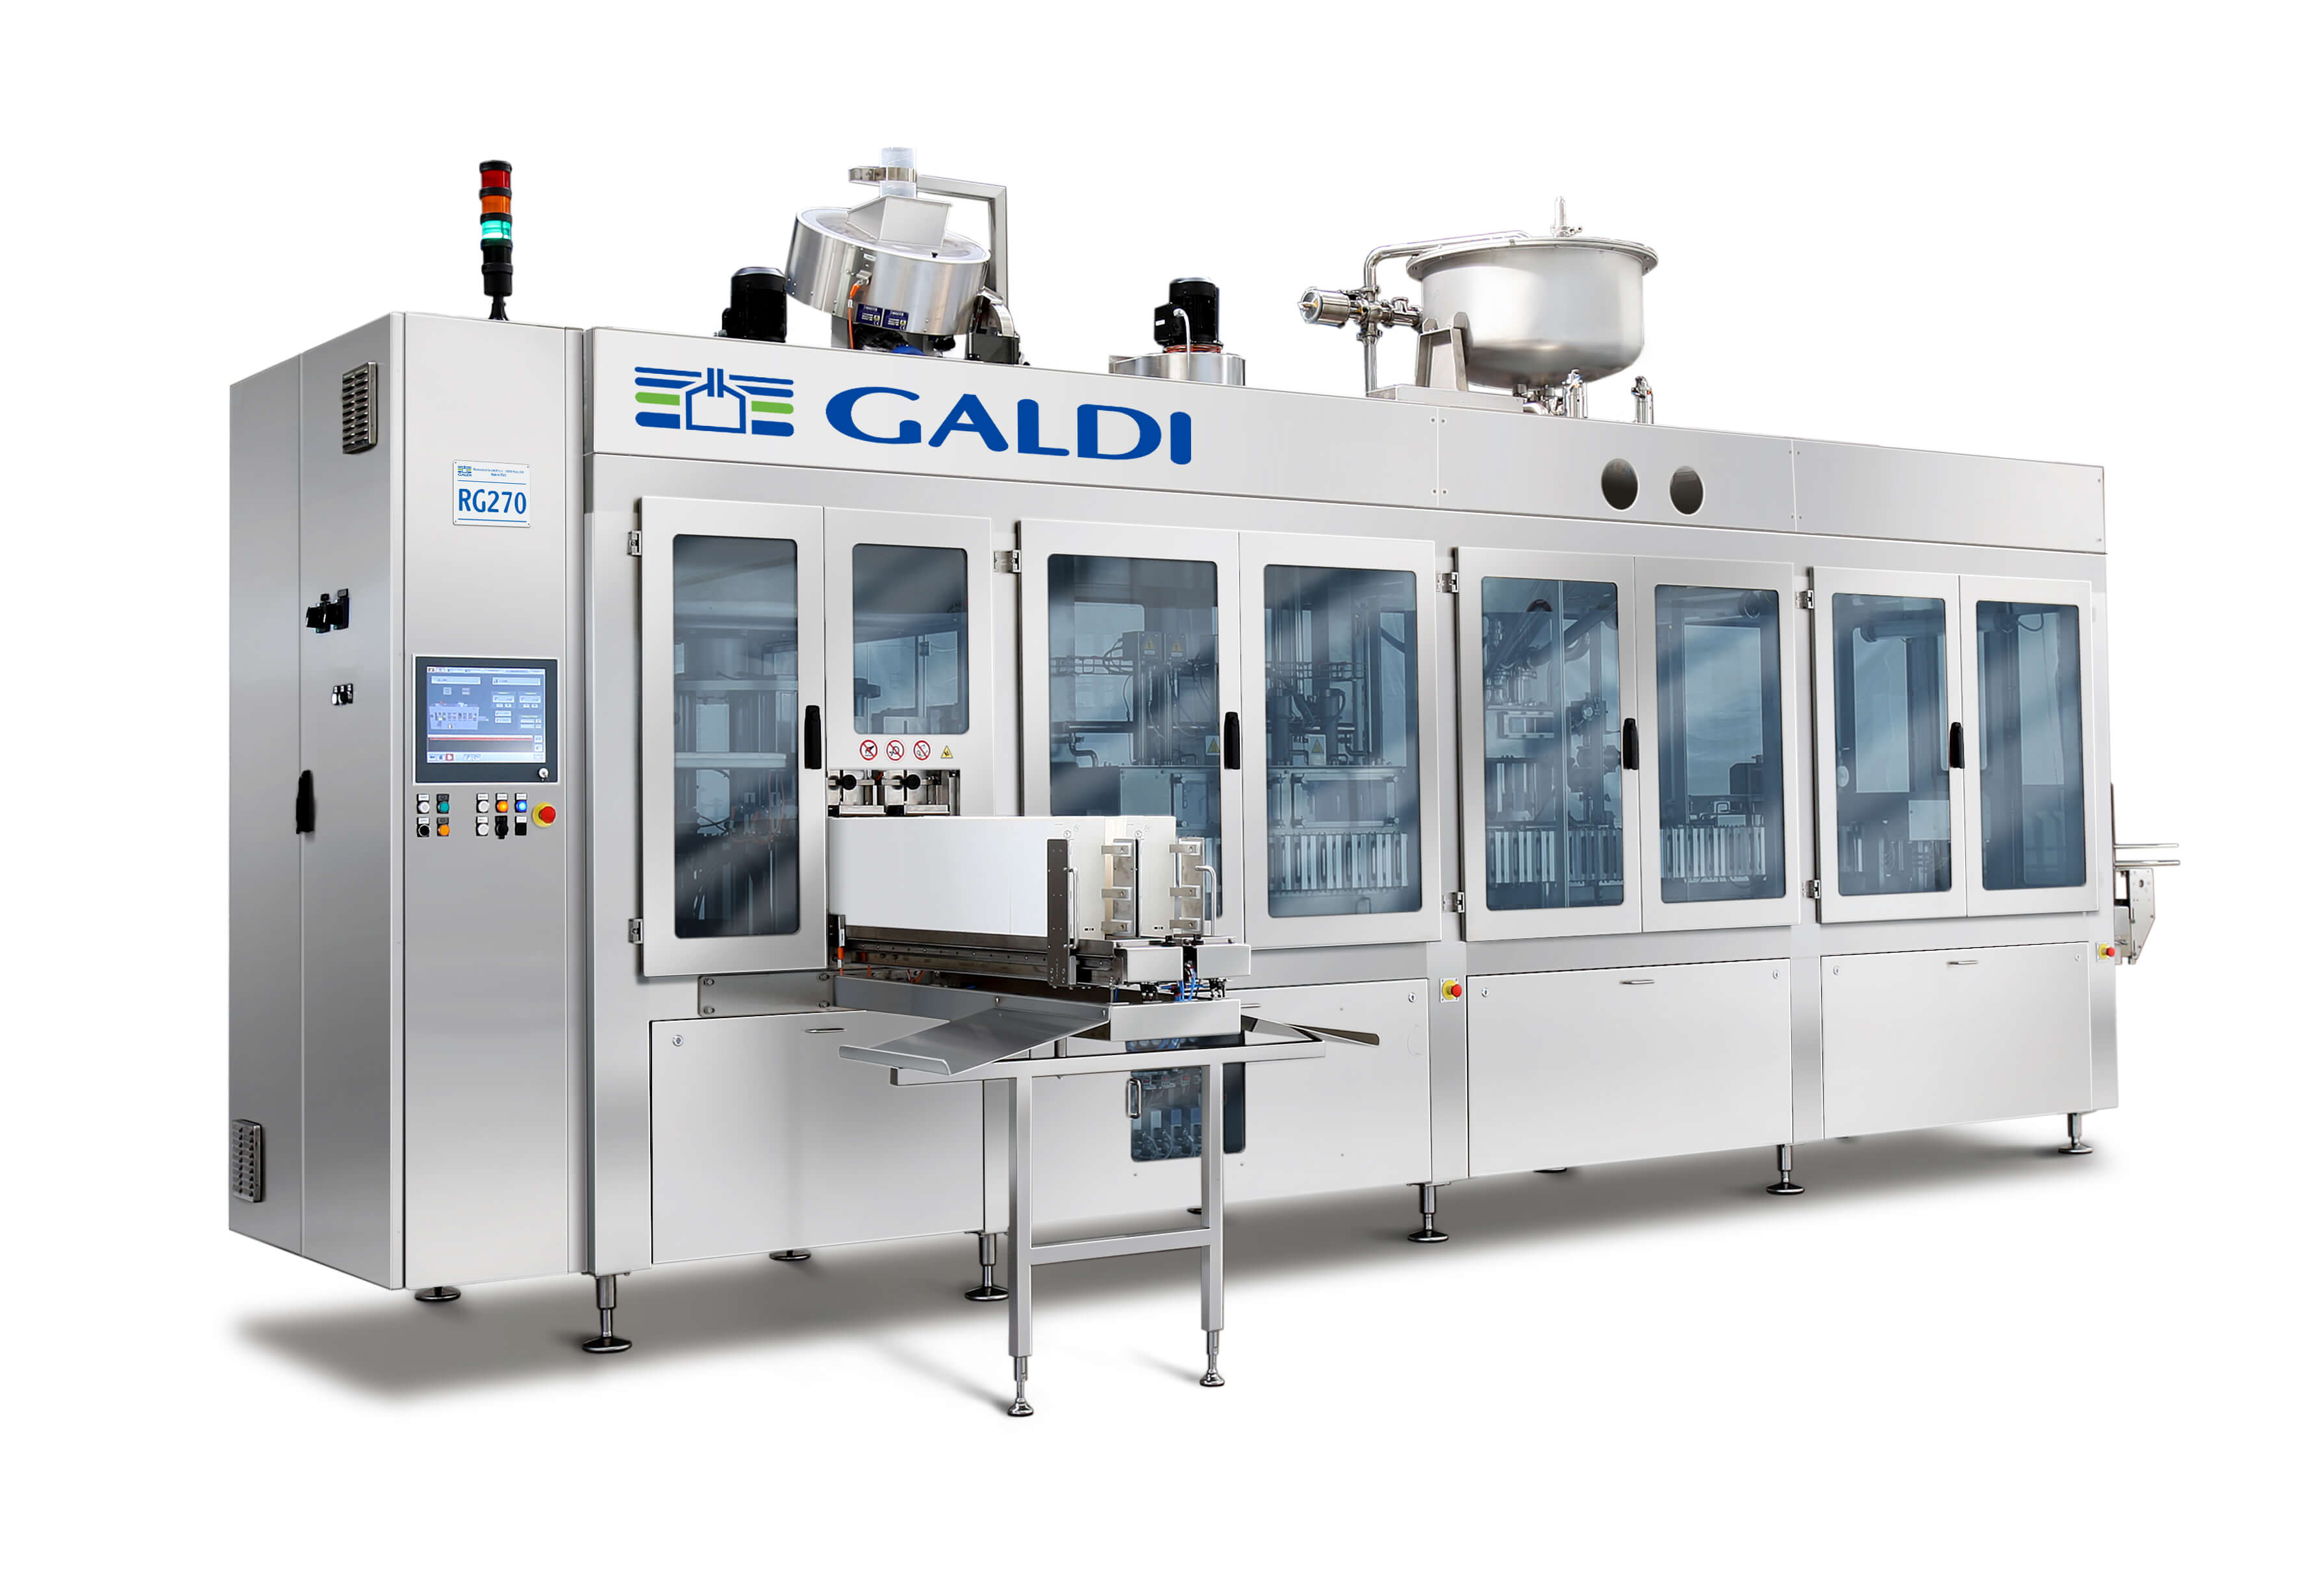 Galdi Machine series RG270 Compact